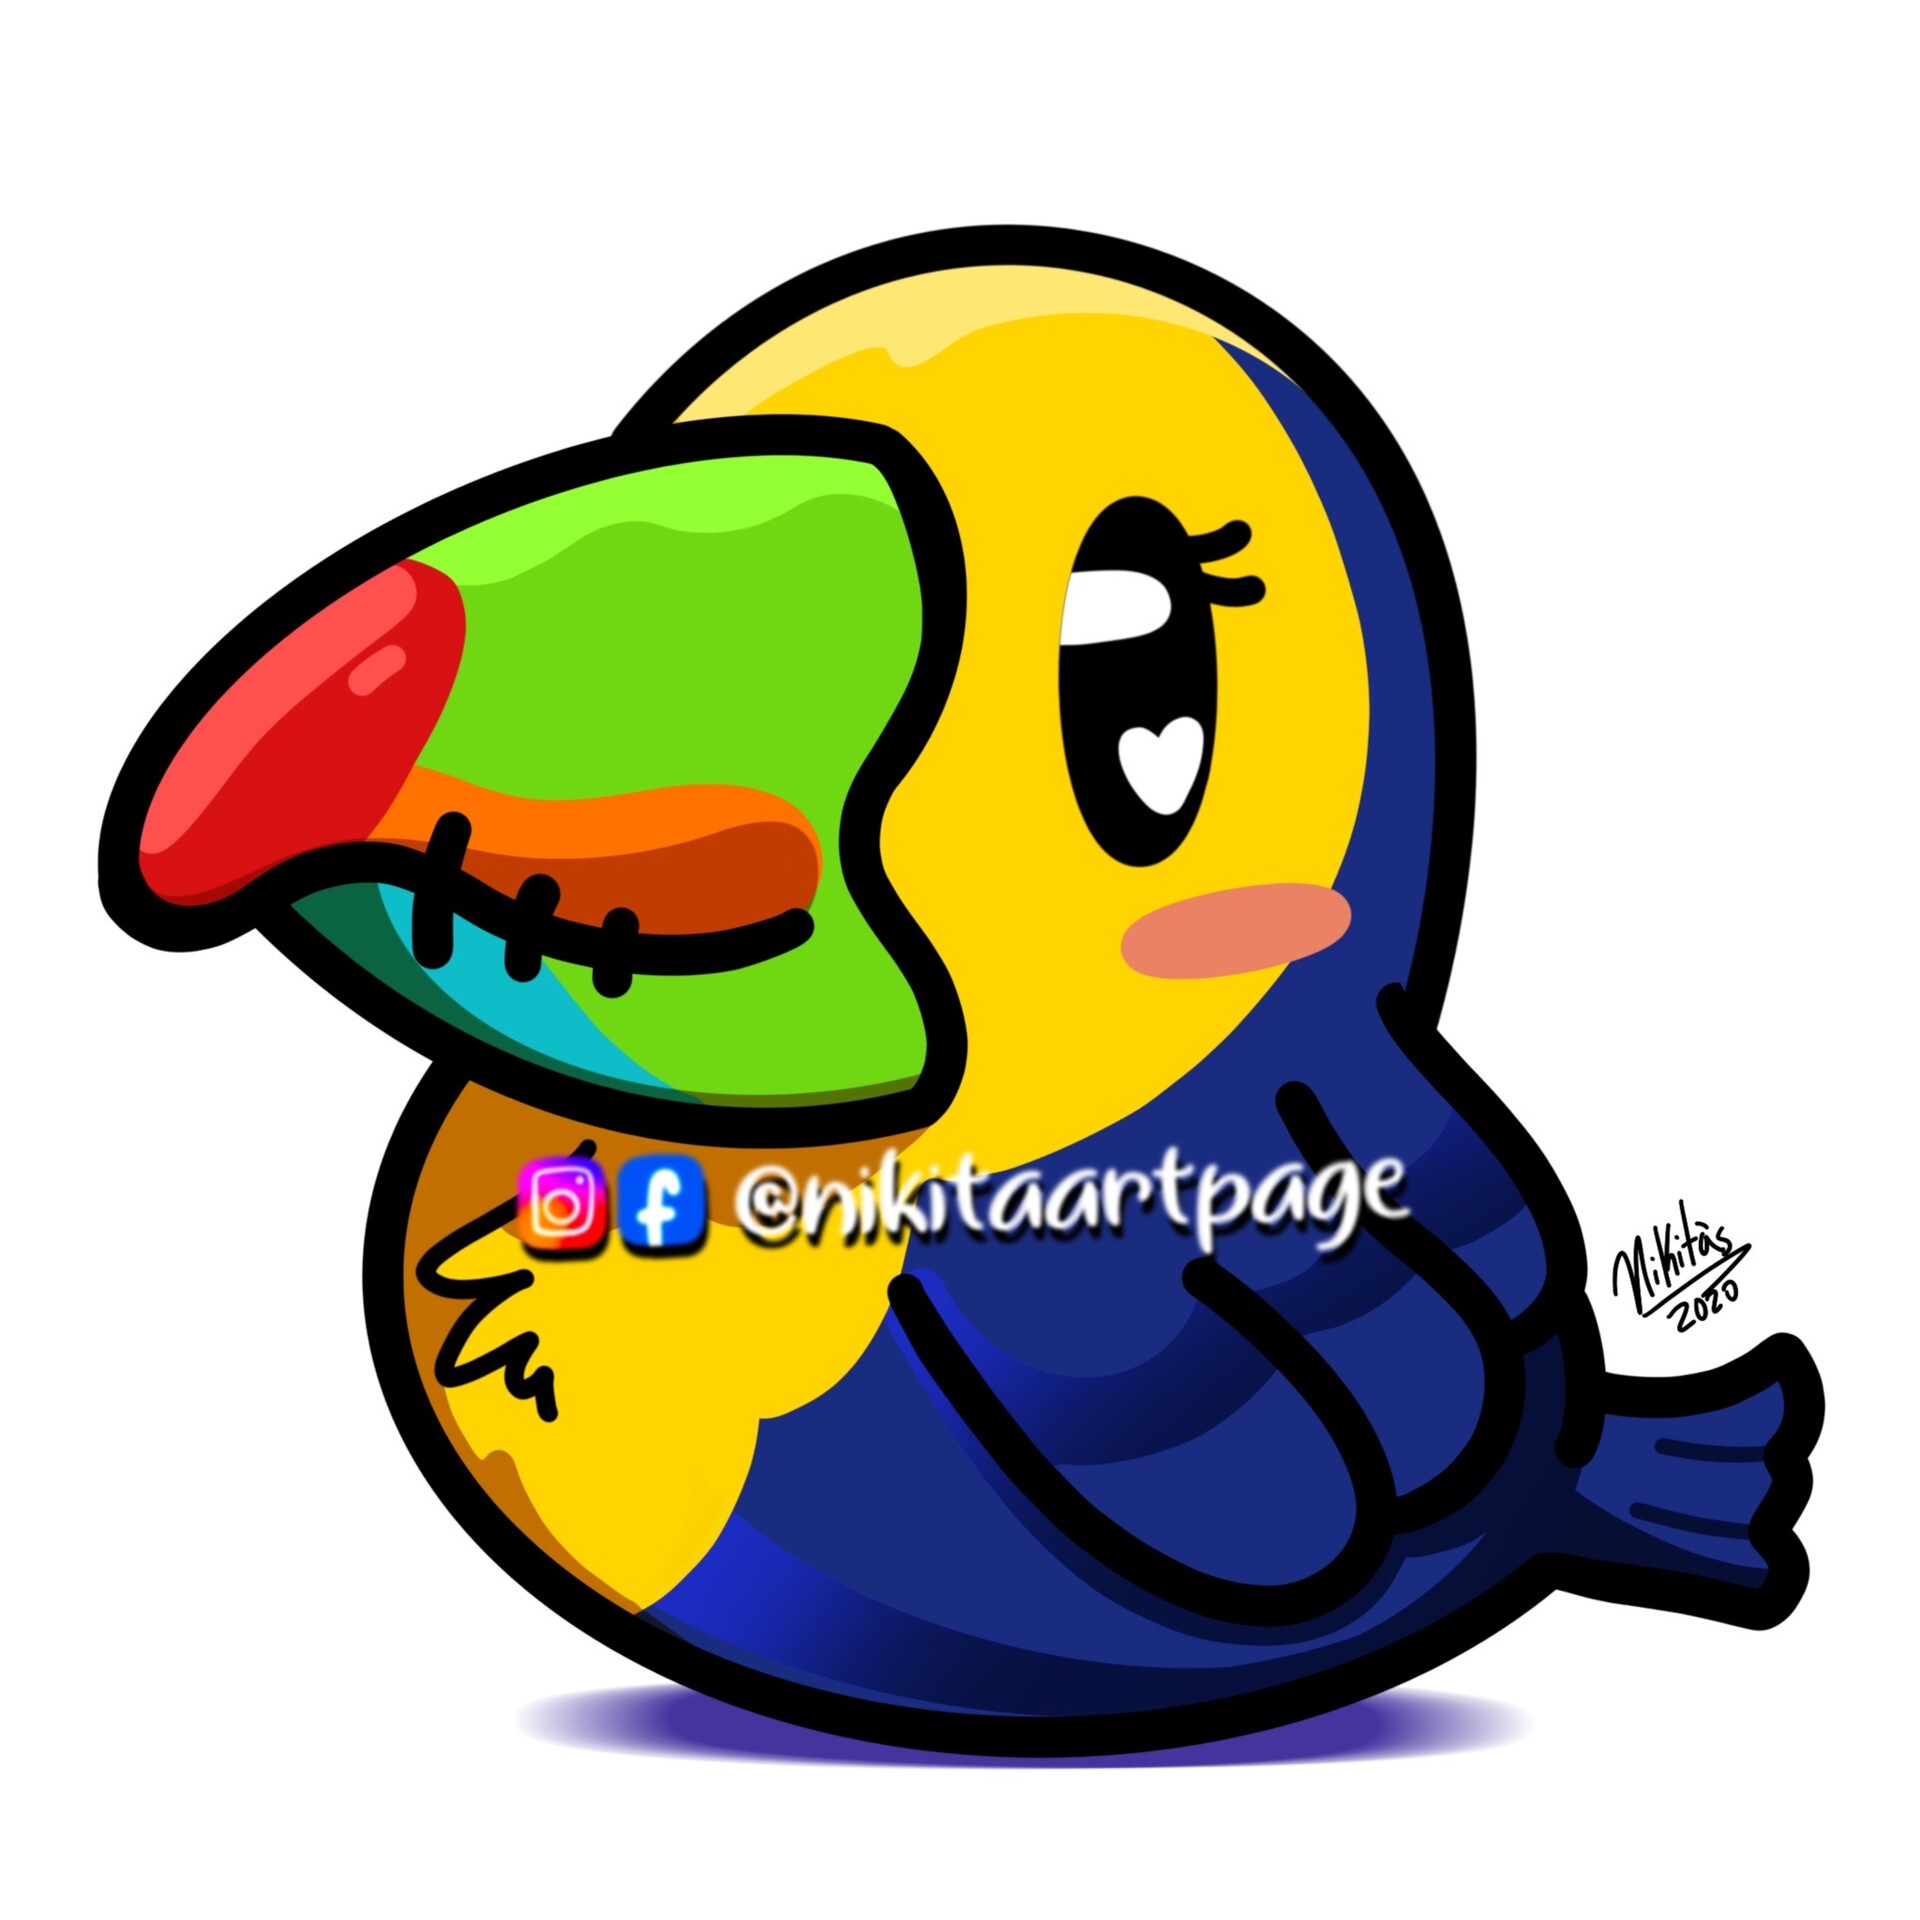 toucan cartoon